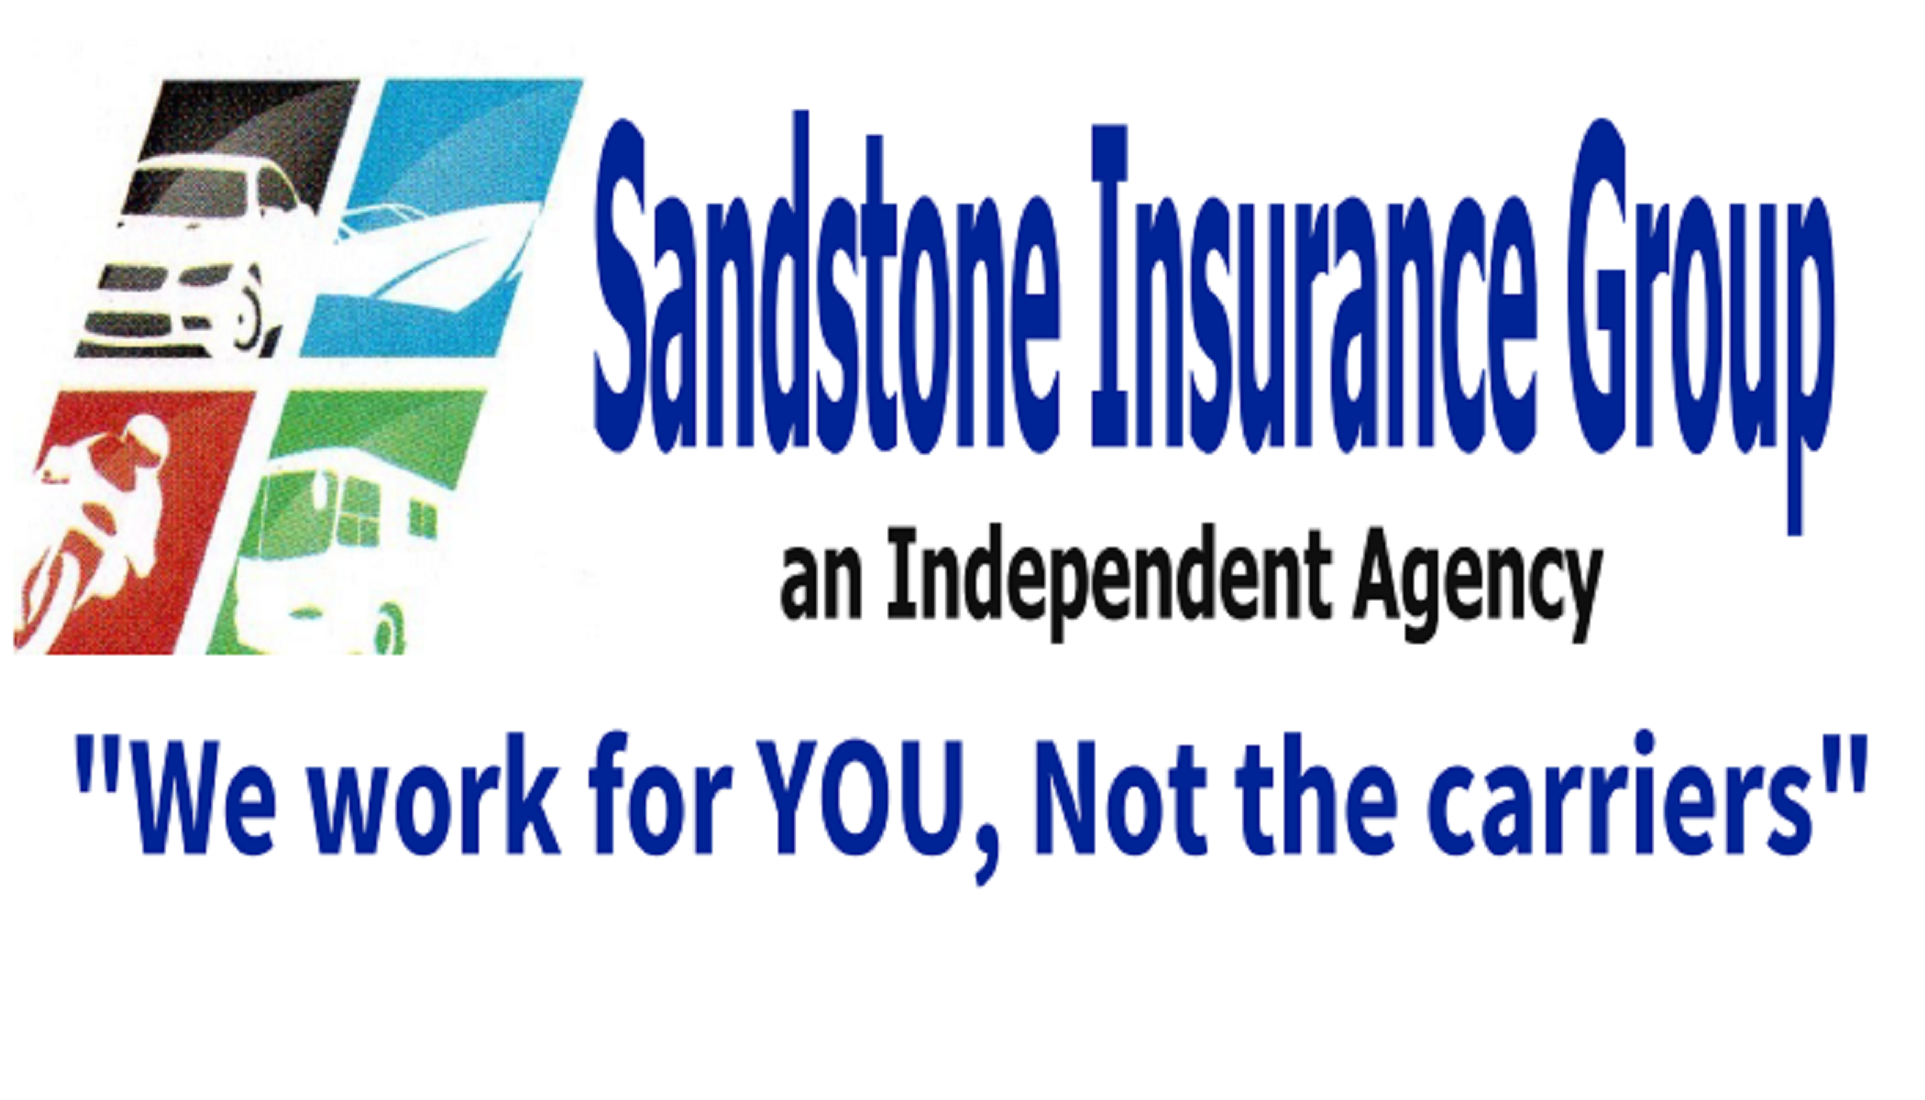 Sandstone Insurance Group Sheffield Village (440)934-2300